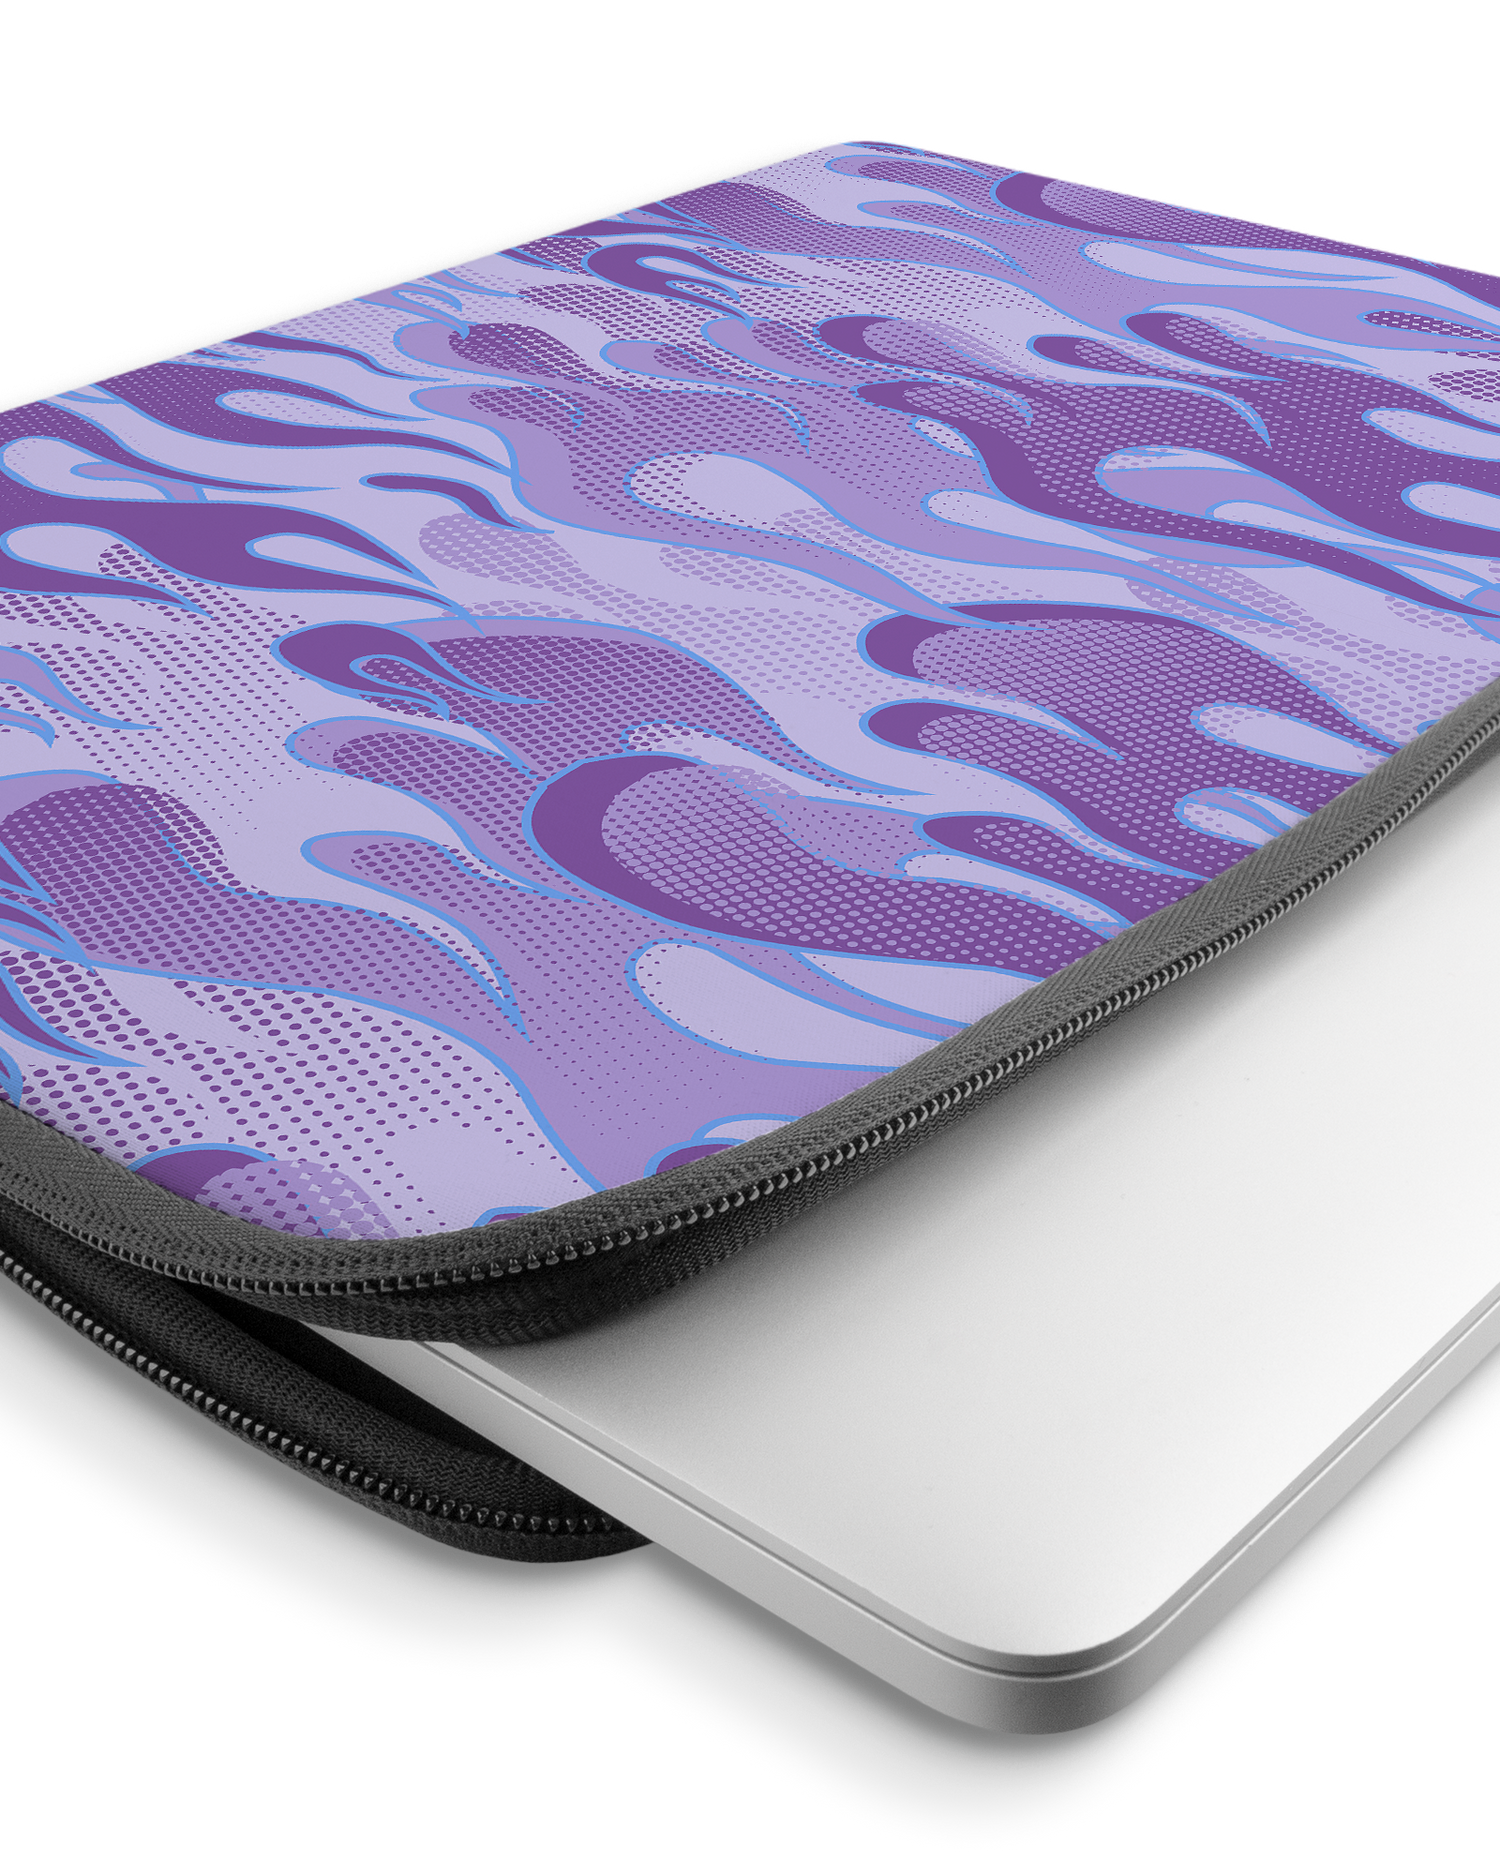 Purple Flames Laptophülle 15-16 Zoll mit Gerät im Inneren